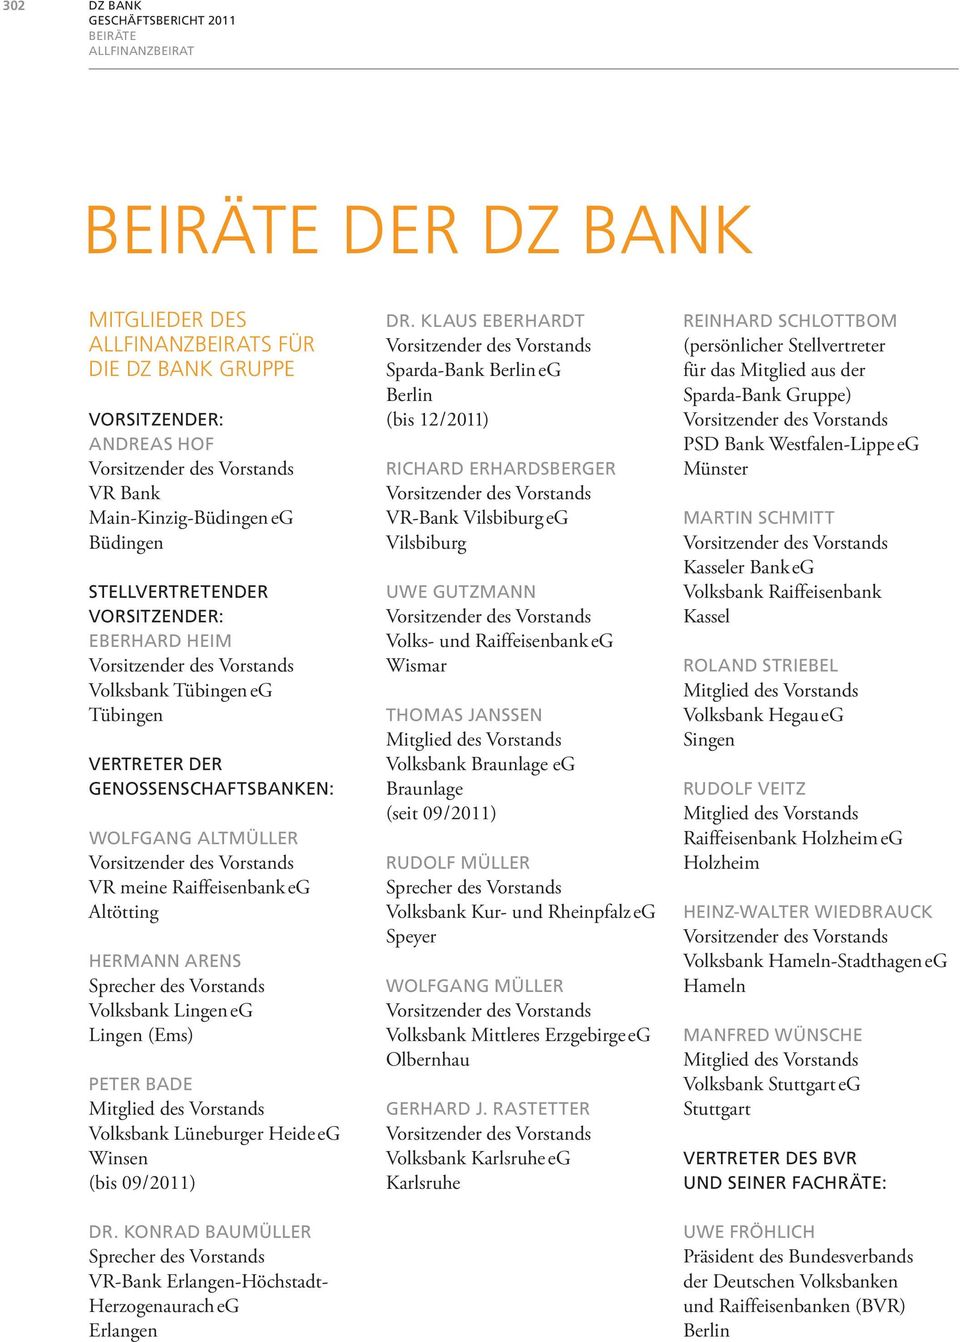 2011) Dr. Konrad Baumüller VR-Bank Erlangen-Höchstadt- Herzogenaurach eg Erlangen Dr.